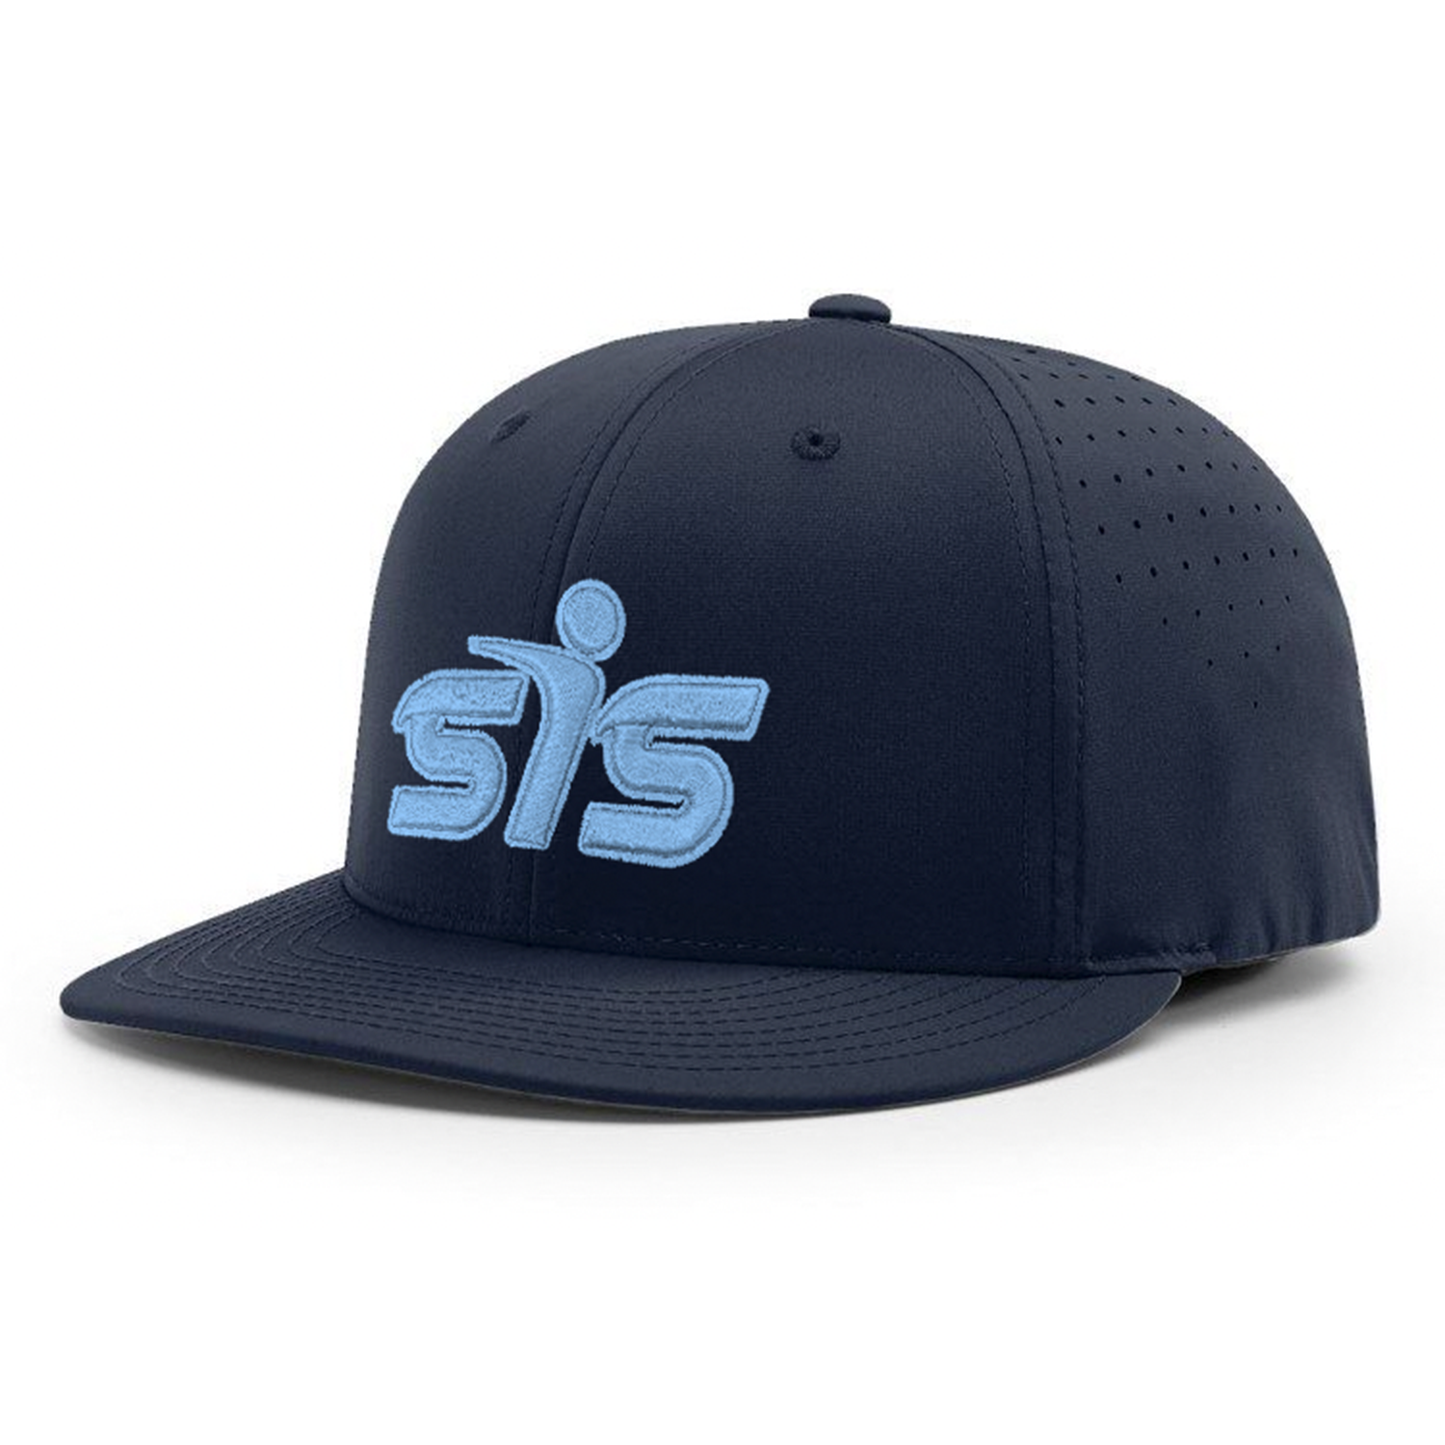 Smash It Sports CA i8503 Performance Hat - Navy/Carolina